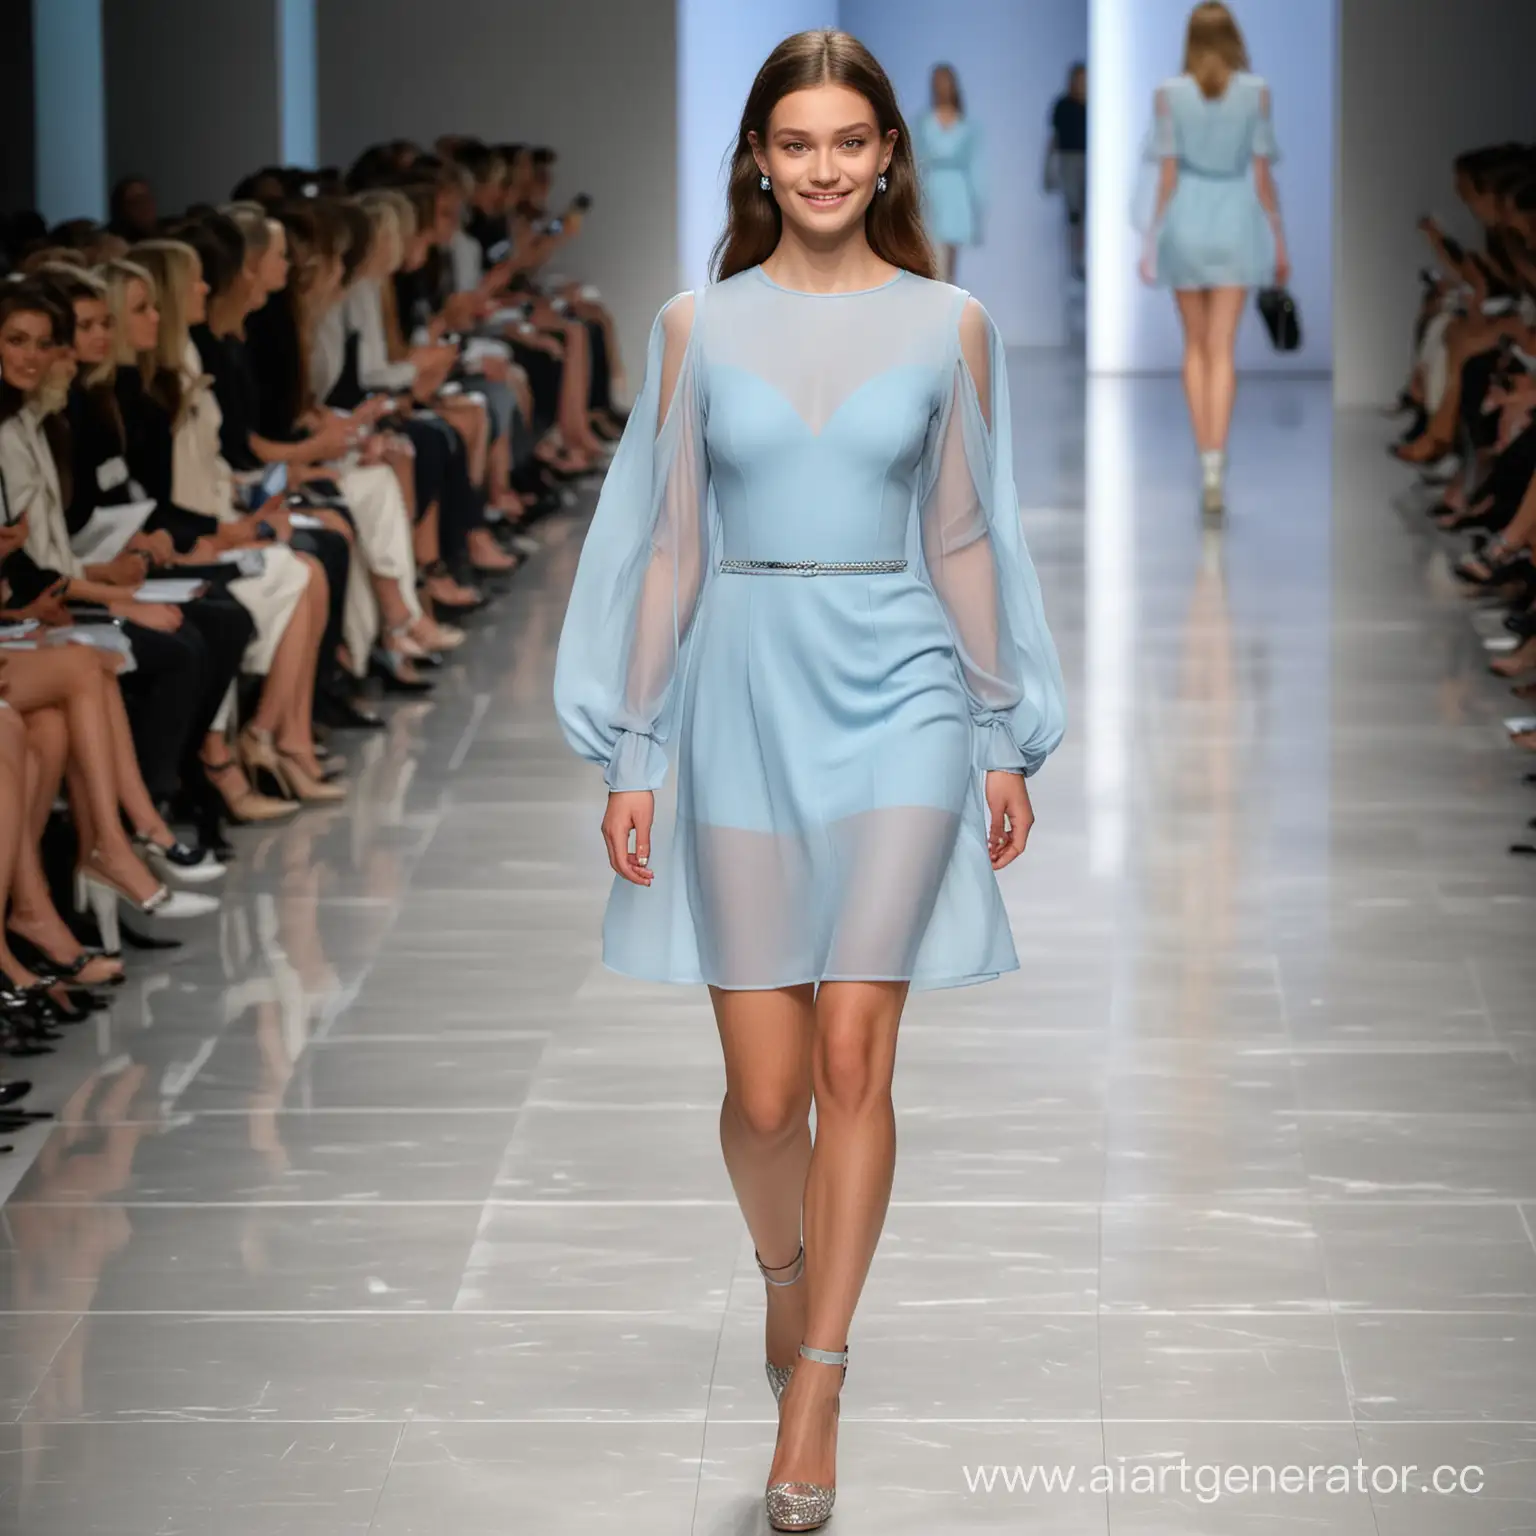 Elegant-Russian-Model-in-SemiTransparent-Sleeve-Light-Blue-Dress-at-Milan-Fashion-Week